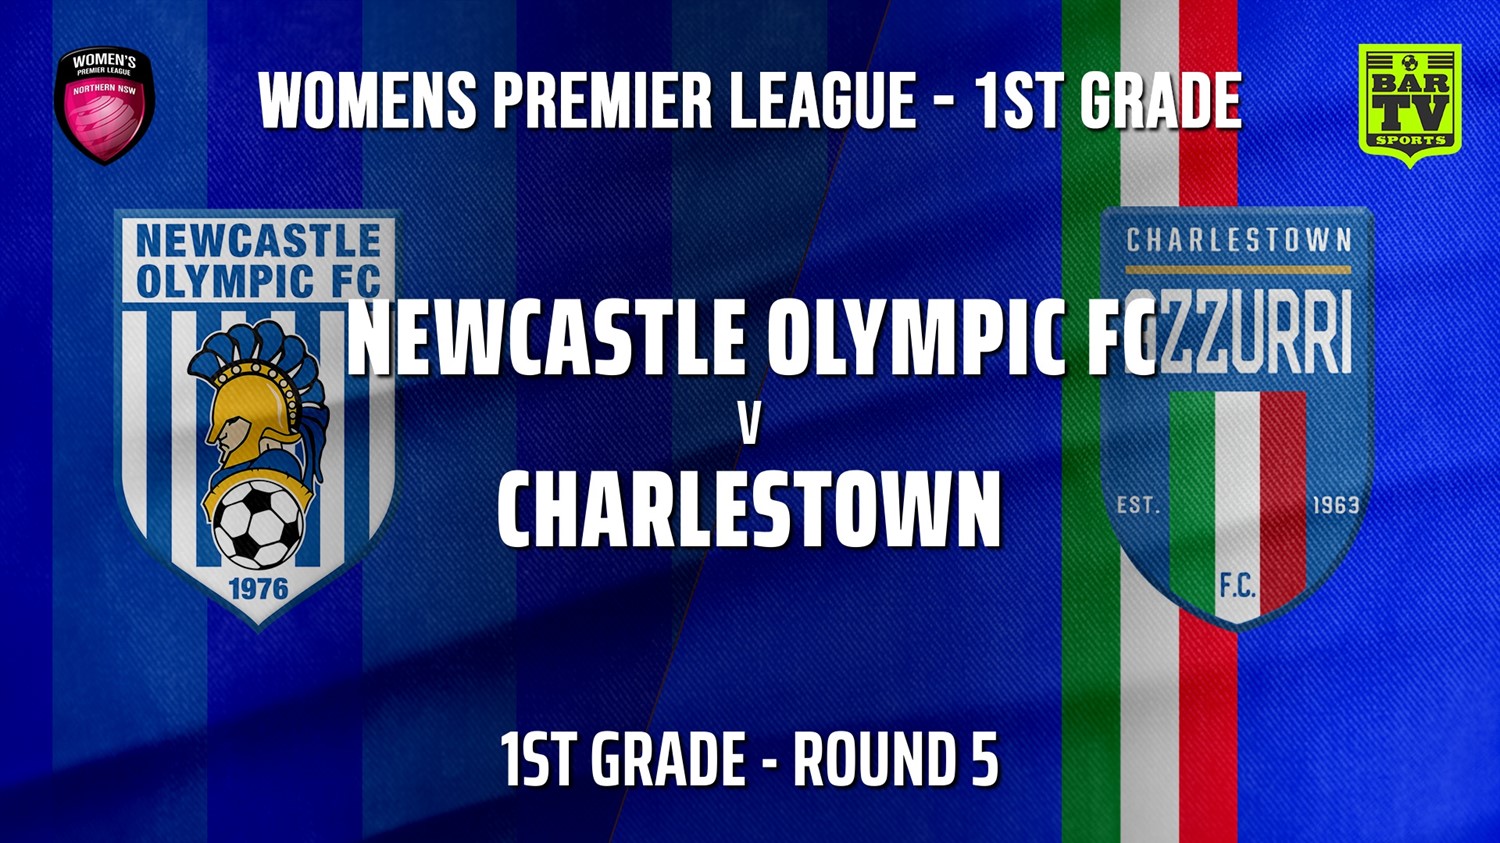 210508-Herald Women’s Premier League Round 5 - 1st Grade - Newcastle Olympic FC (women) v Charlestown Azzurri FC (women) Slate Image